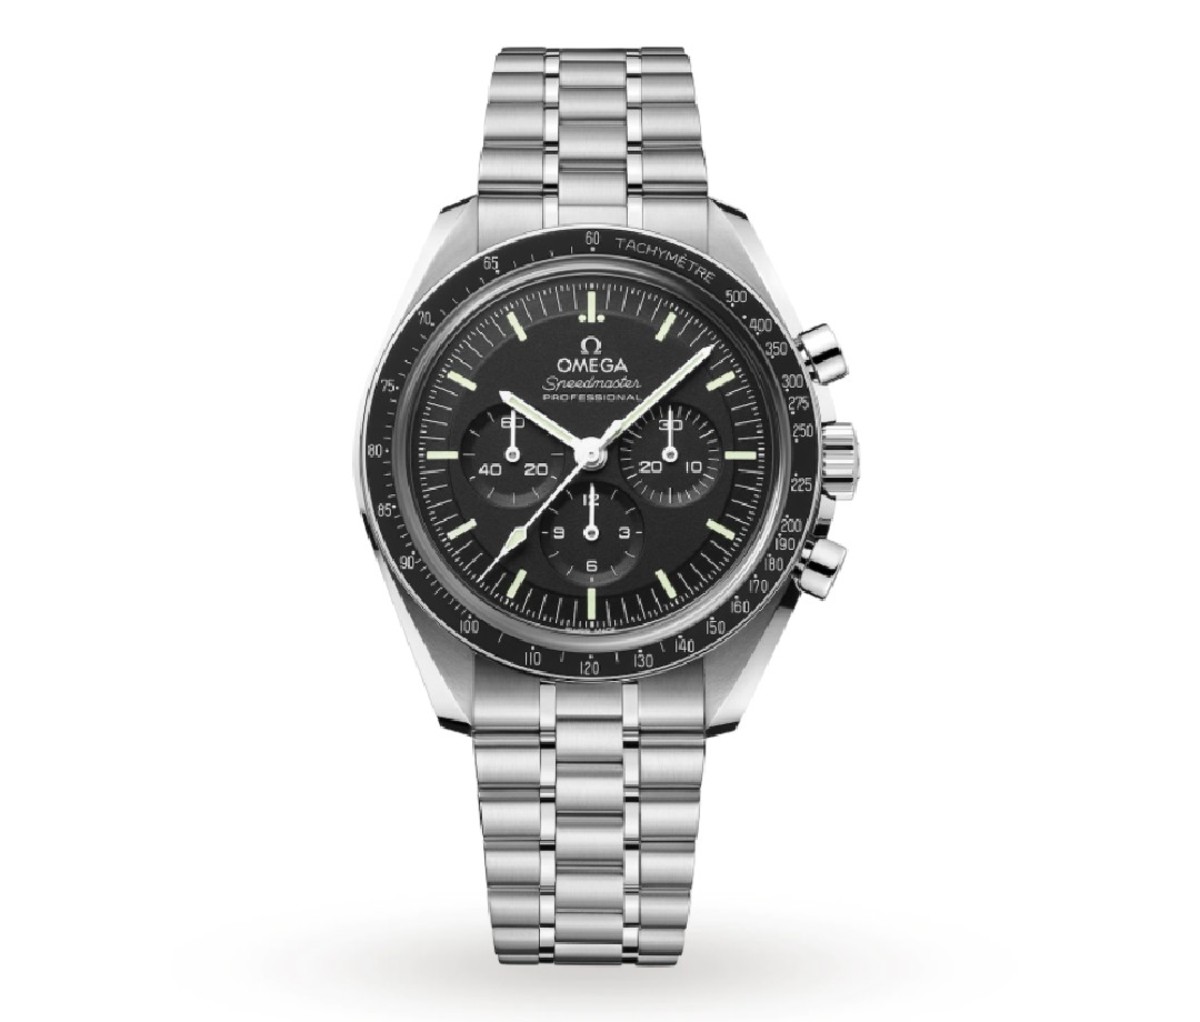 Closeup of Omega Speedmaster Professional watch